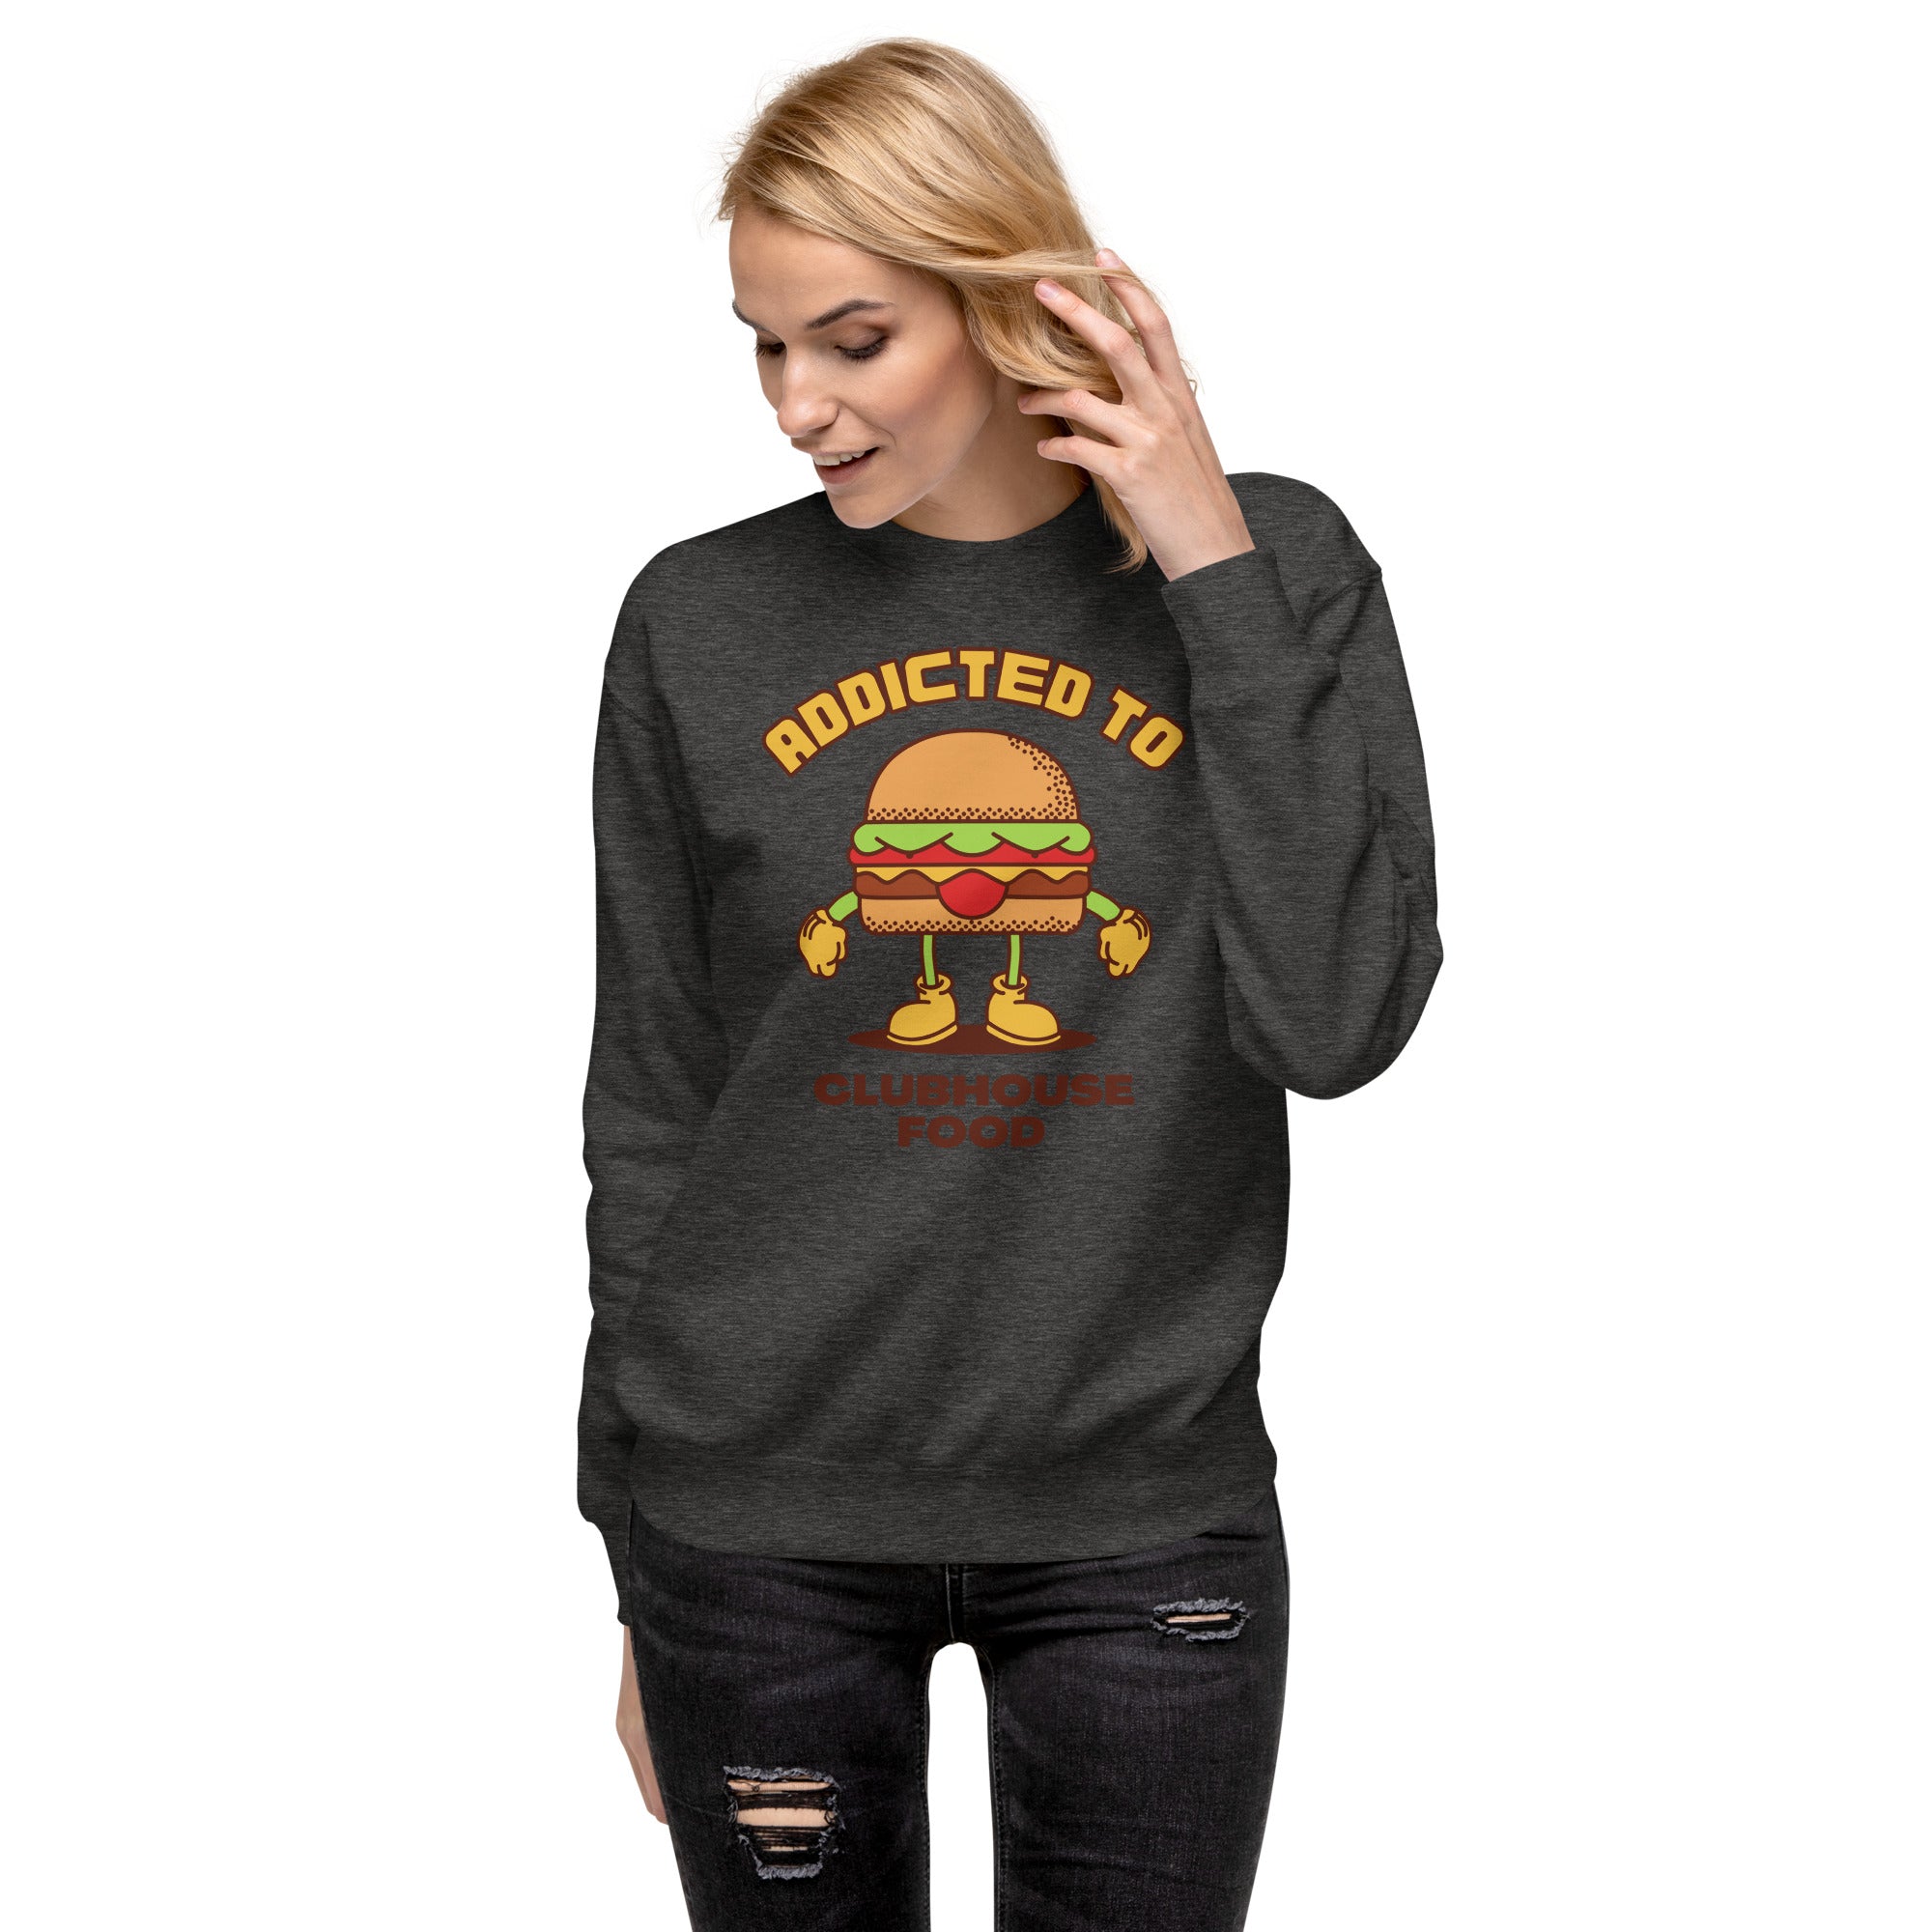 Addicted To Clubhouse Food Women's Premium Sweatshirt